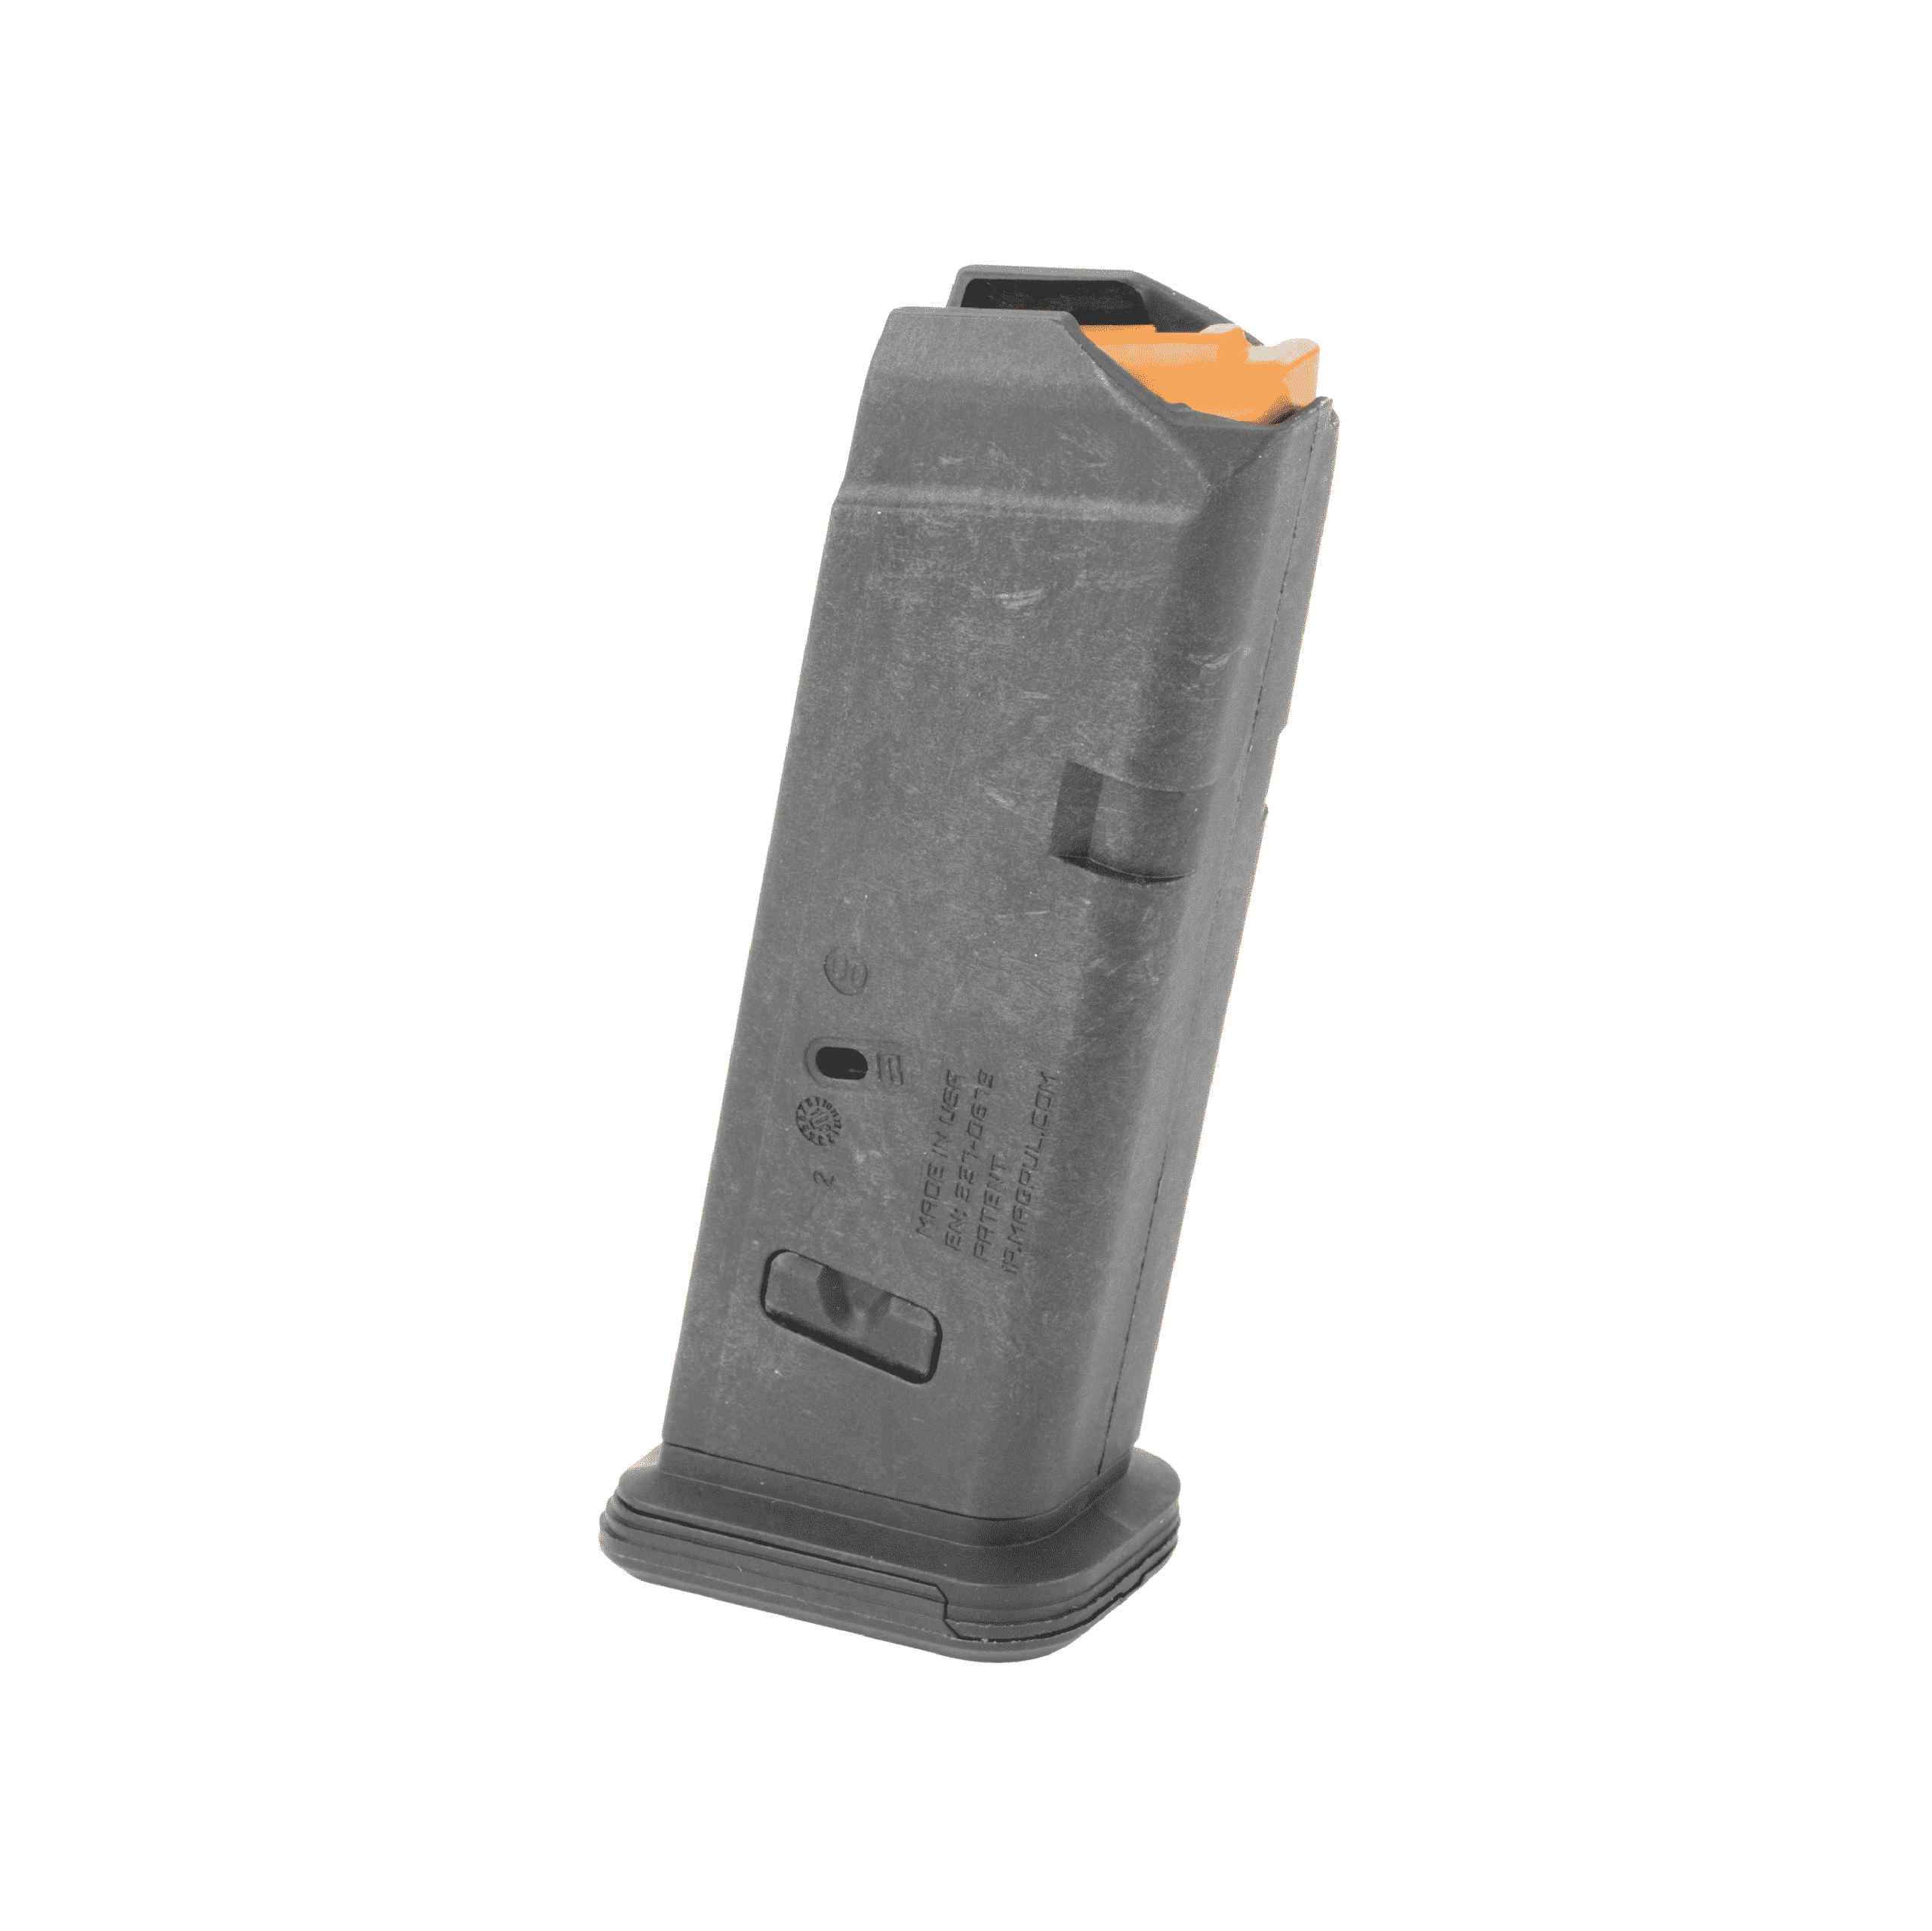 Glock 19 Magazine 10 Round Magpul GL9 MAG907 fits Polymer80 PF940c CA Compliant 